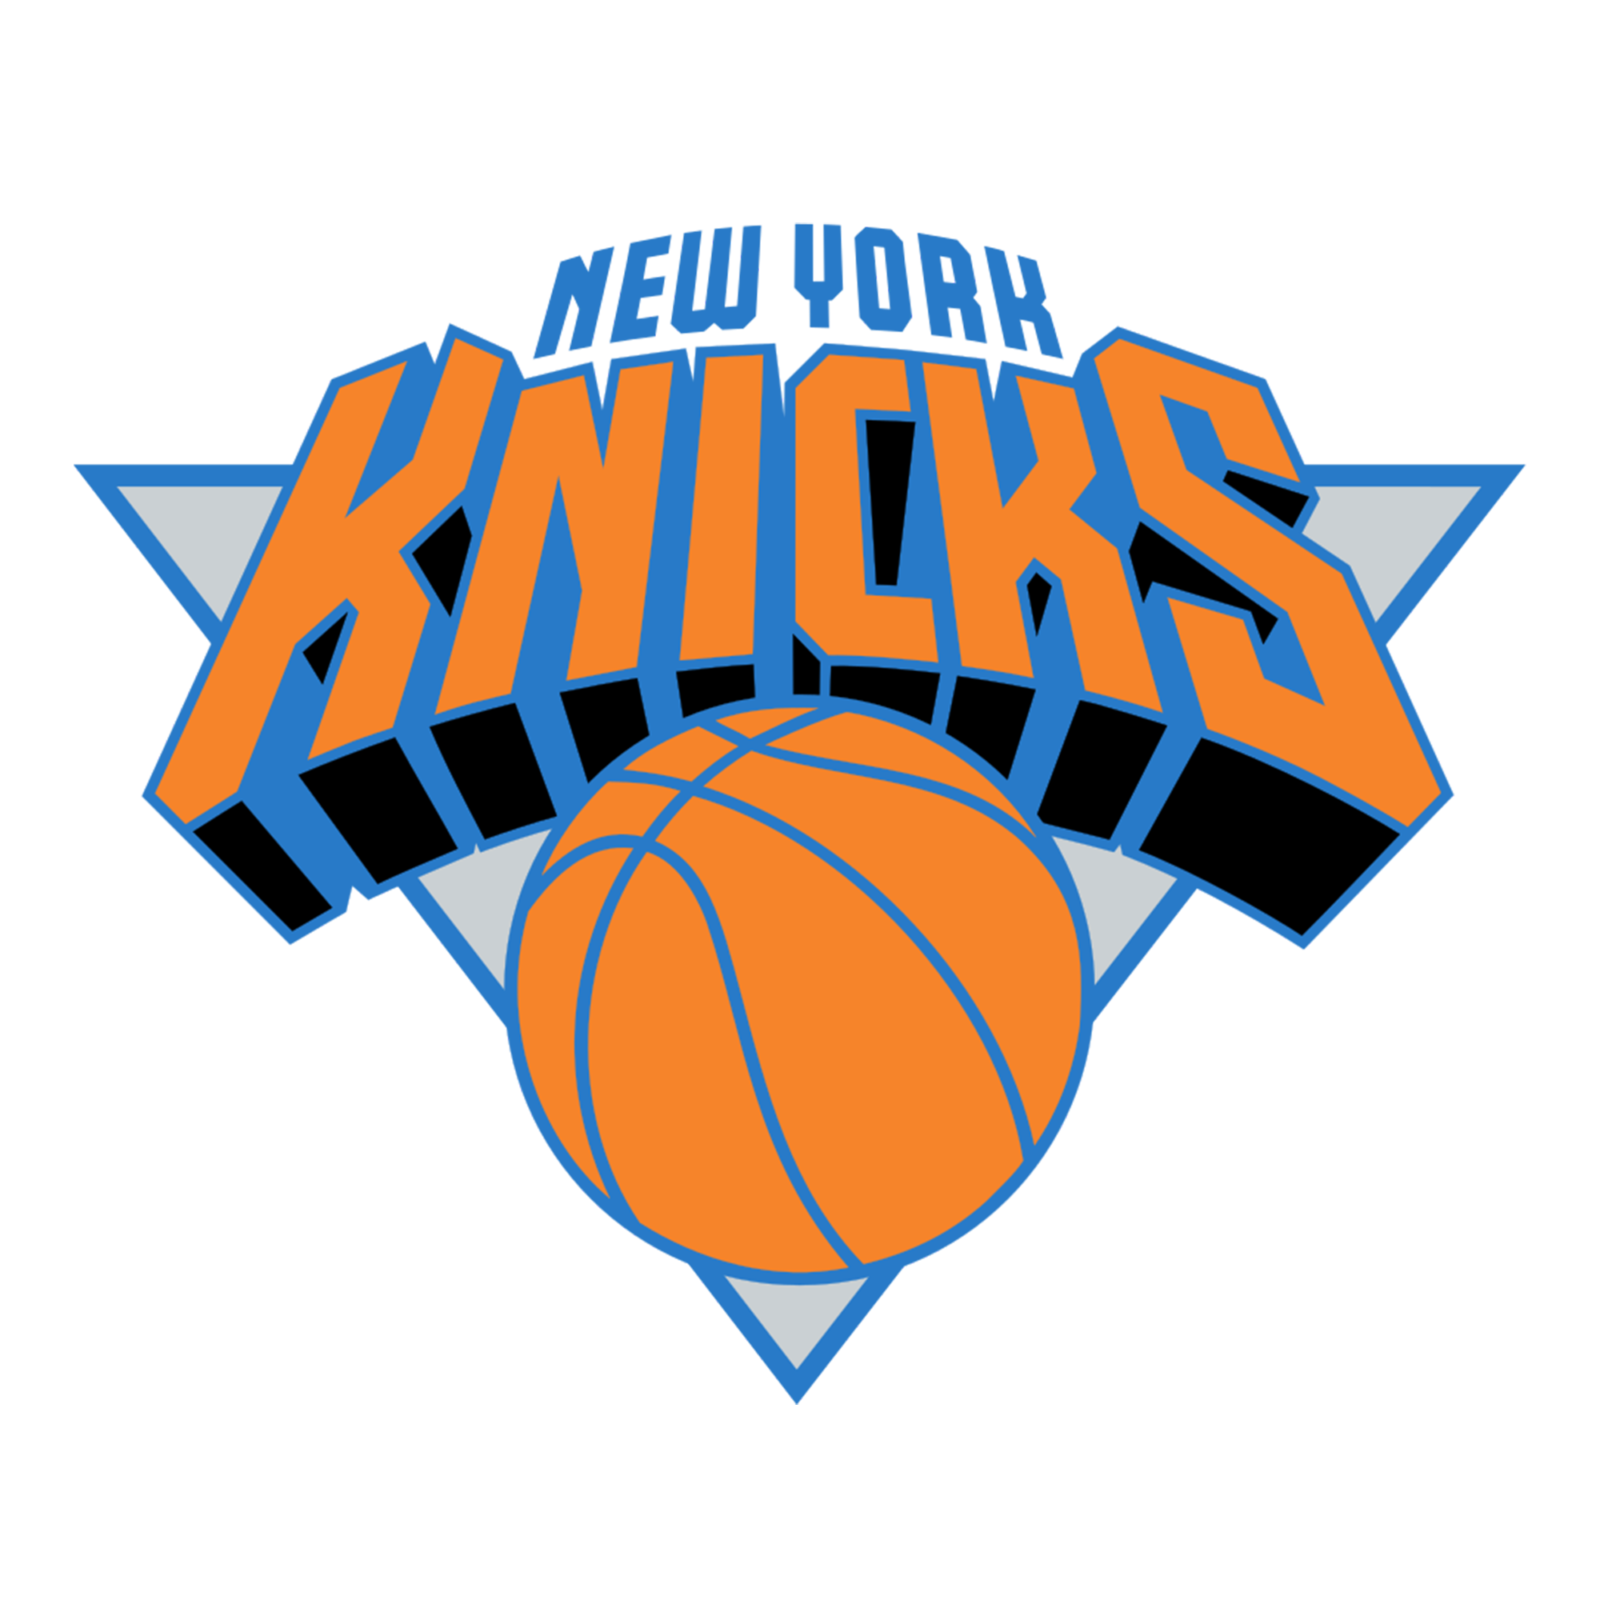 New York Knicks Basketball Club Logo